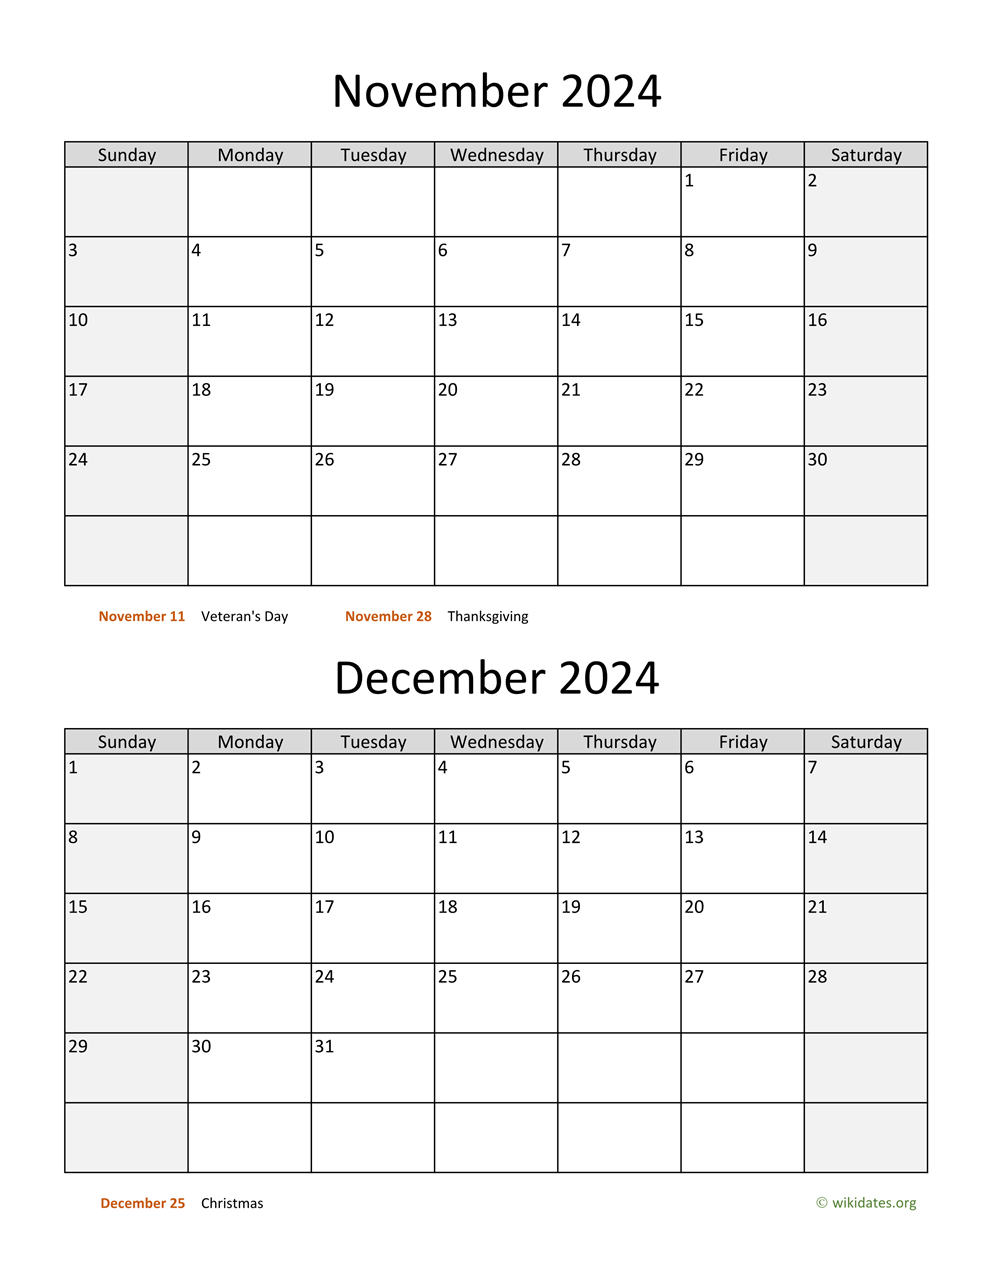 November and December 2024 Calendar WikiDates org